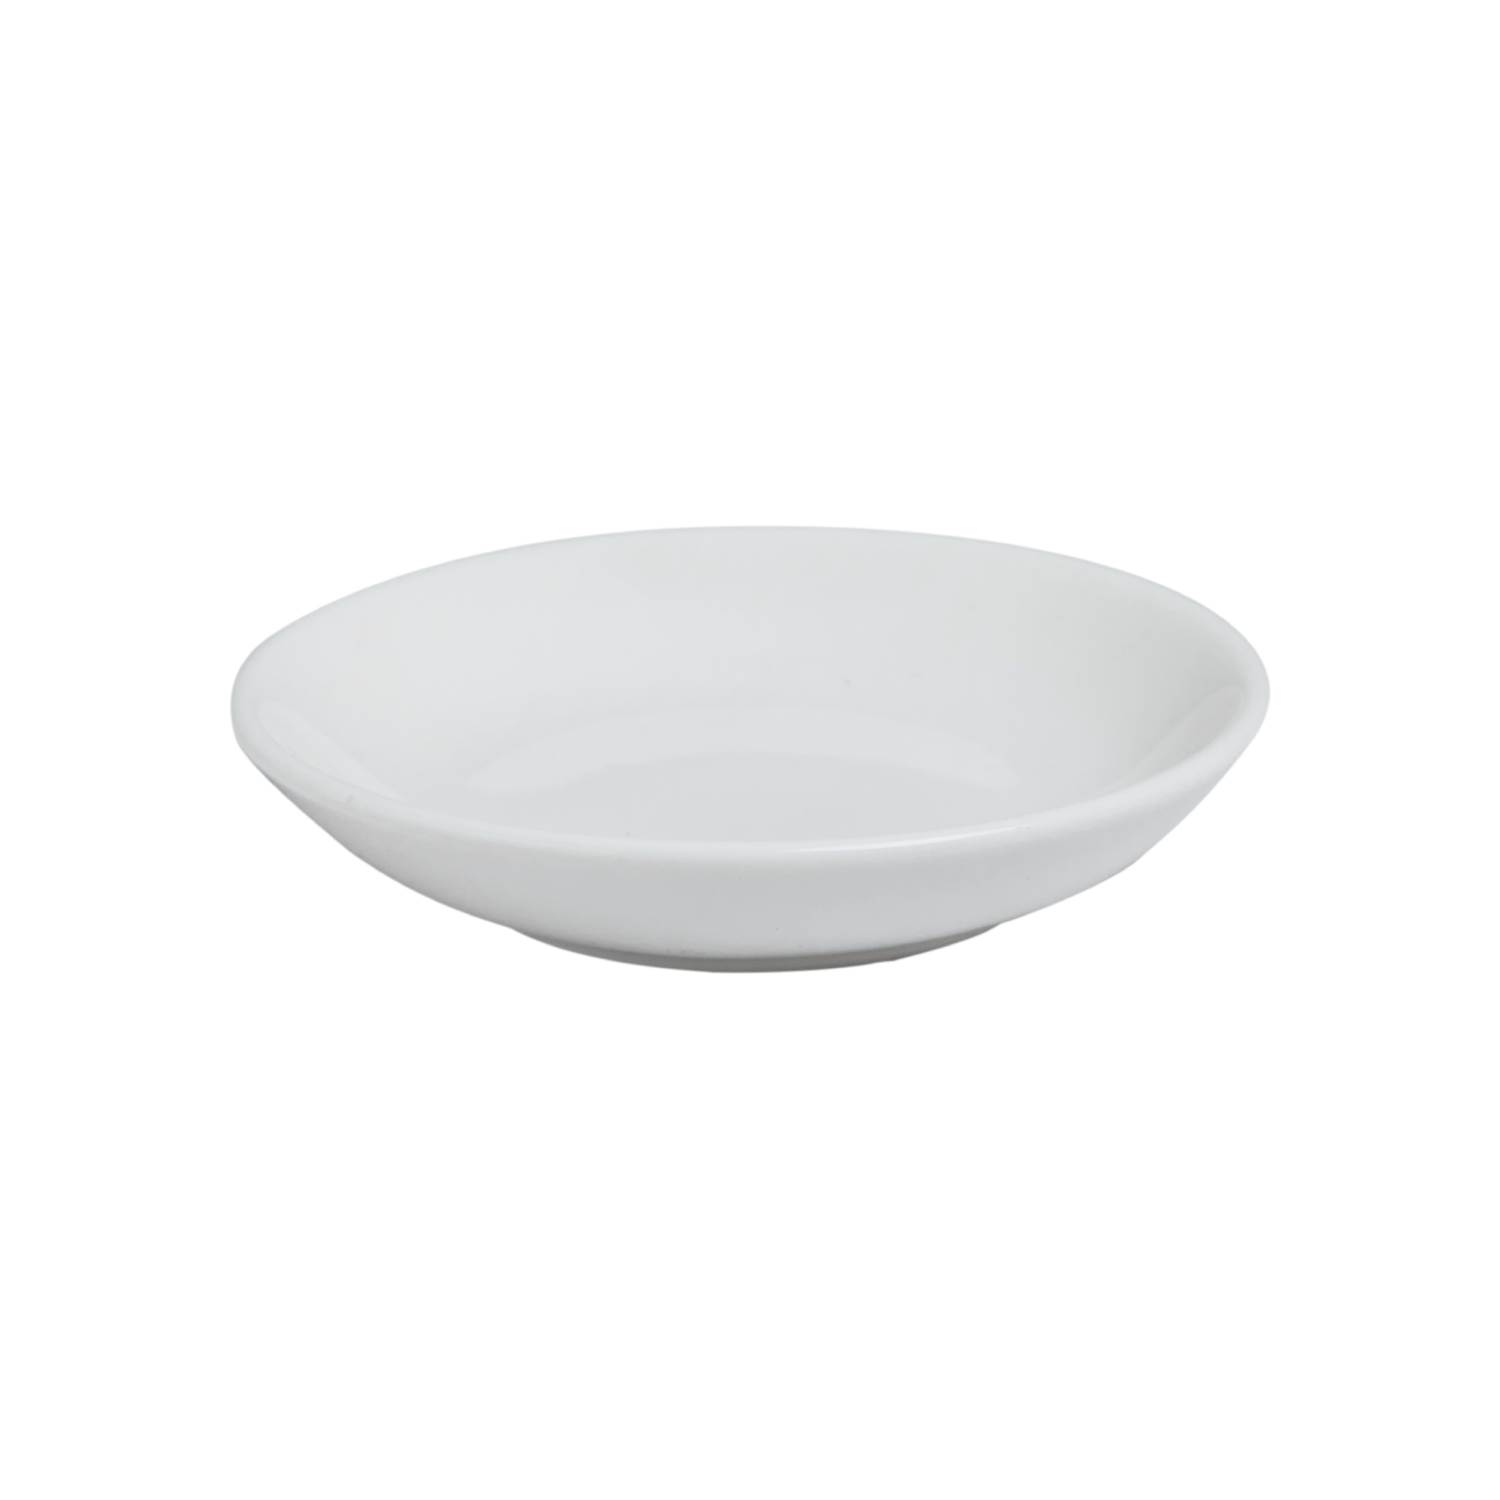 Baralee Simple Plus Small Dish 7.5 Cm (3")